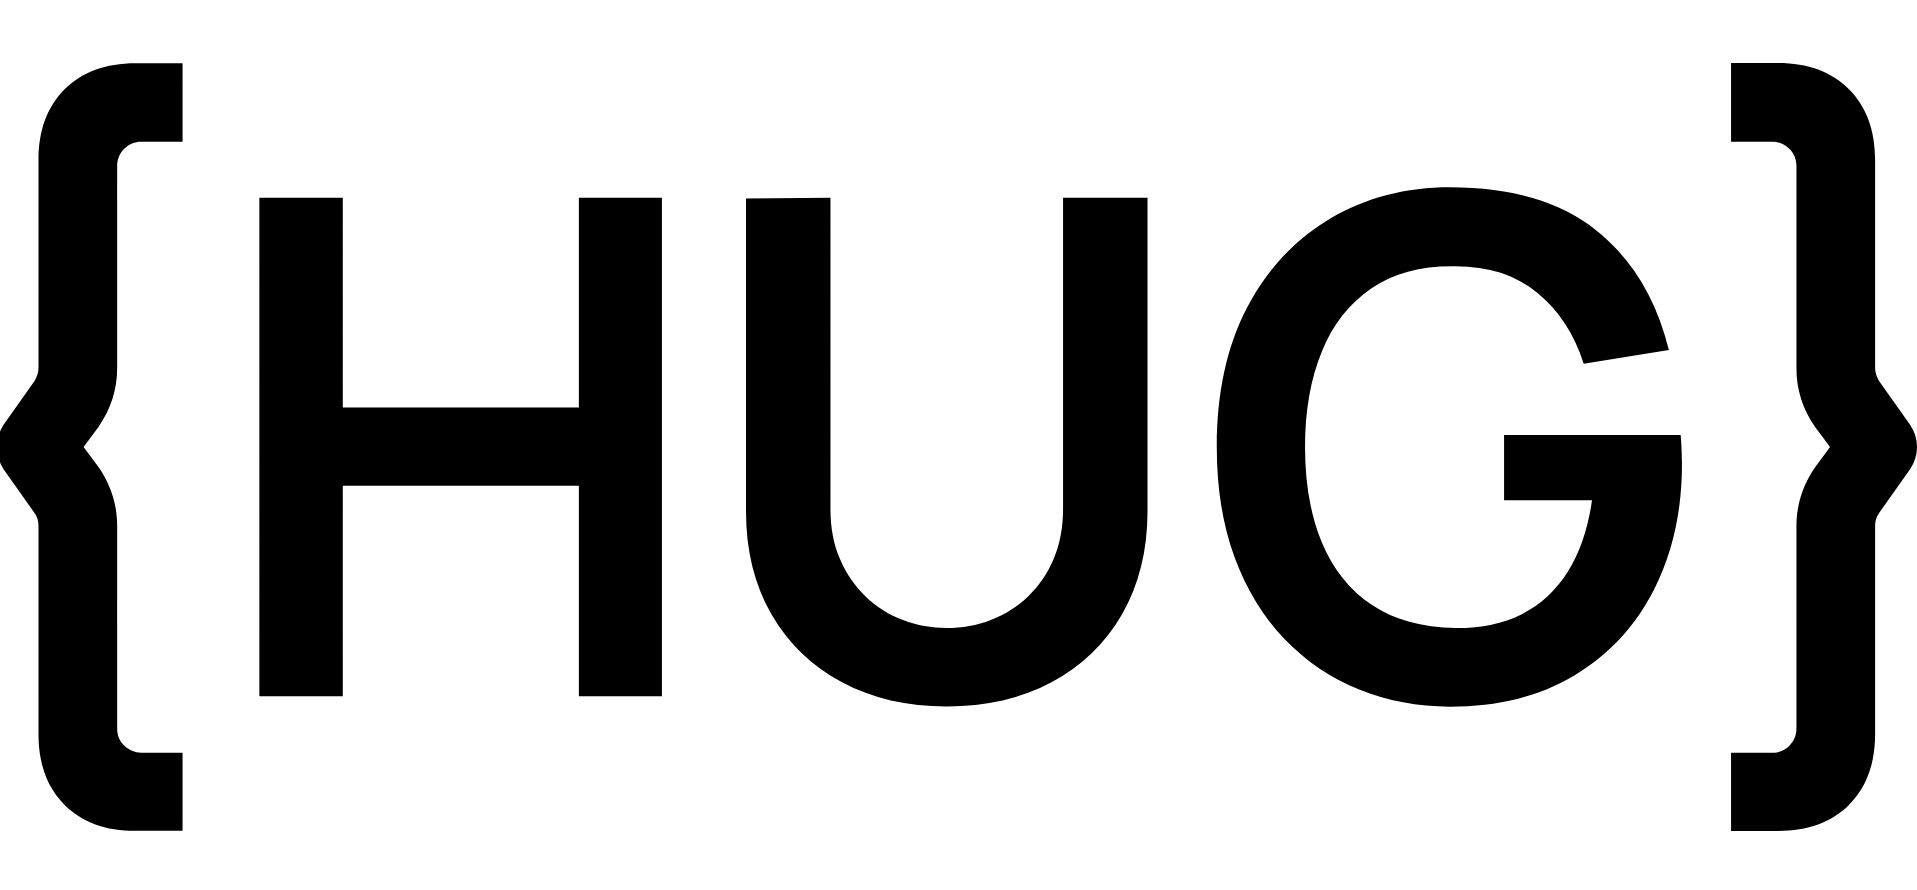 HUG Amsterdam